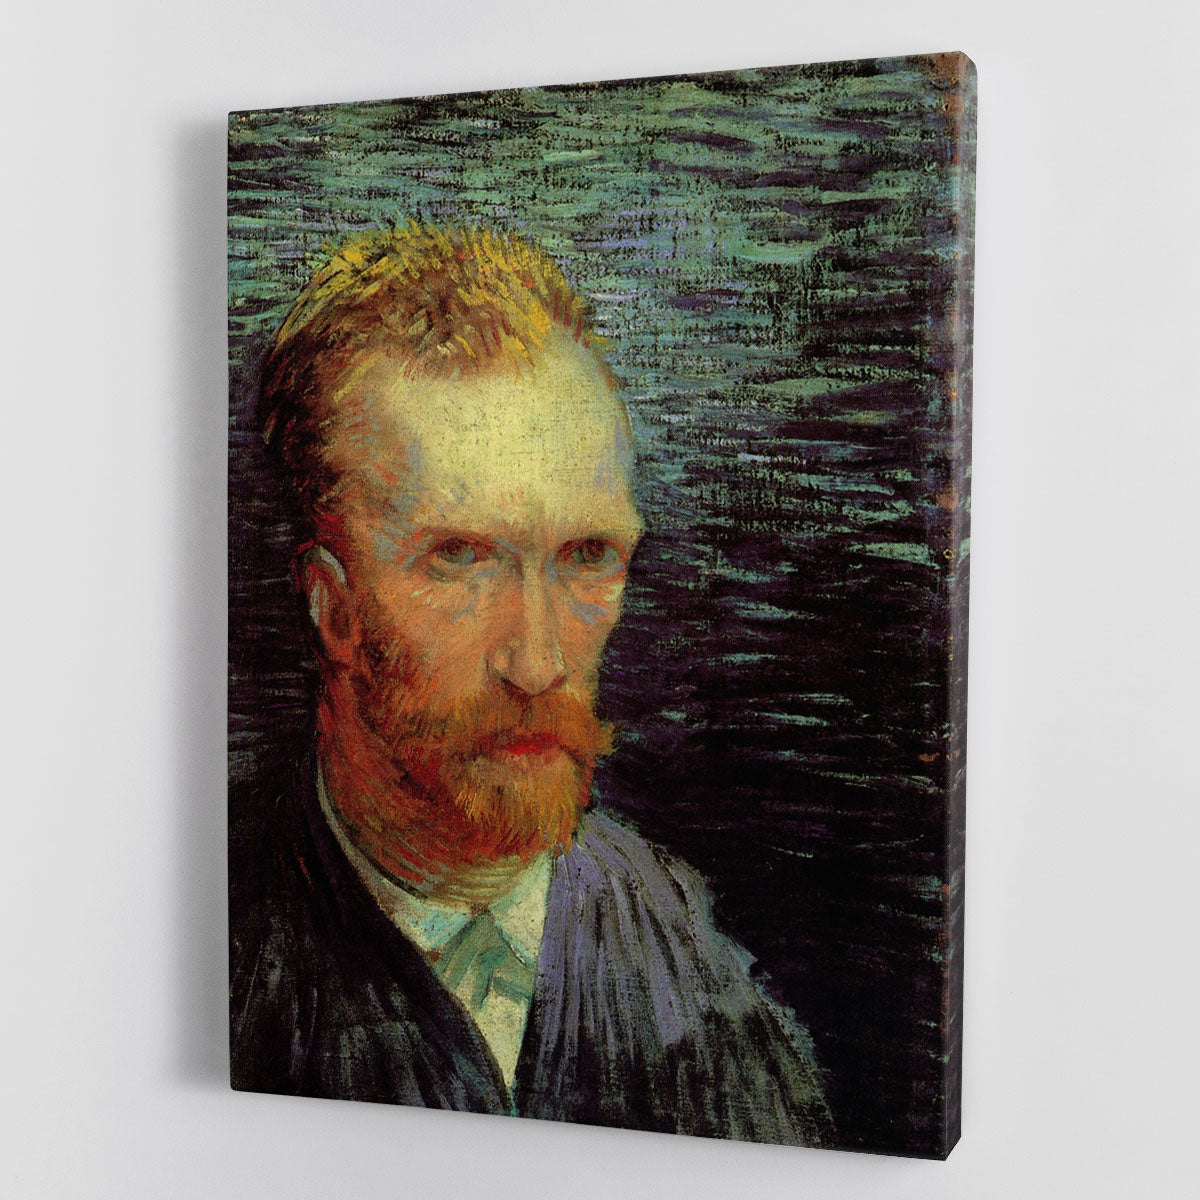 Self-Portrait 7 by Van Gogh Canvas Print or Poster - Canvas Art Rocks - 1